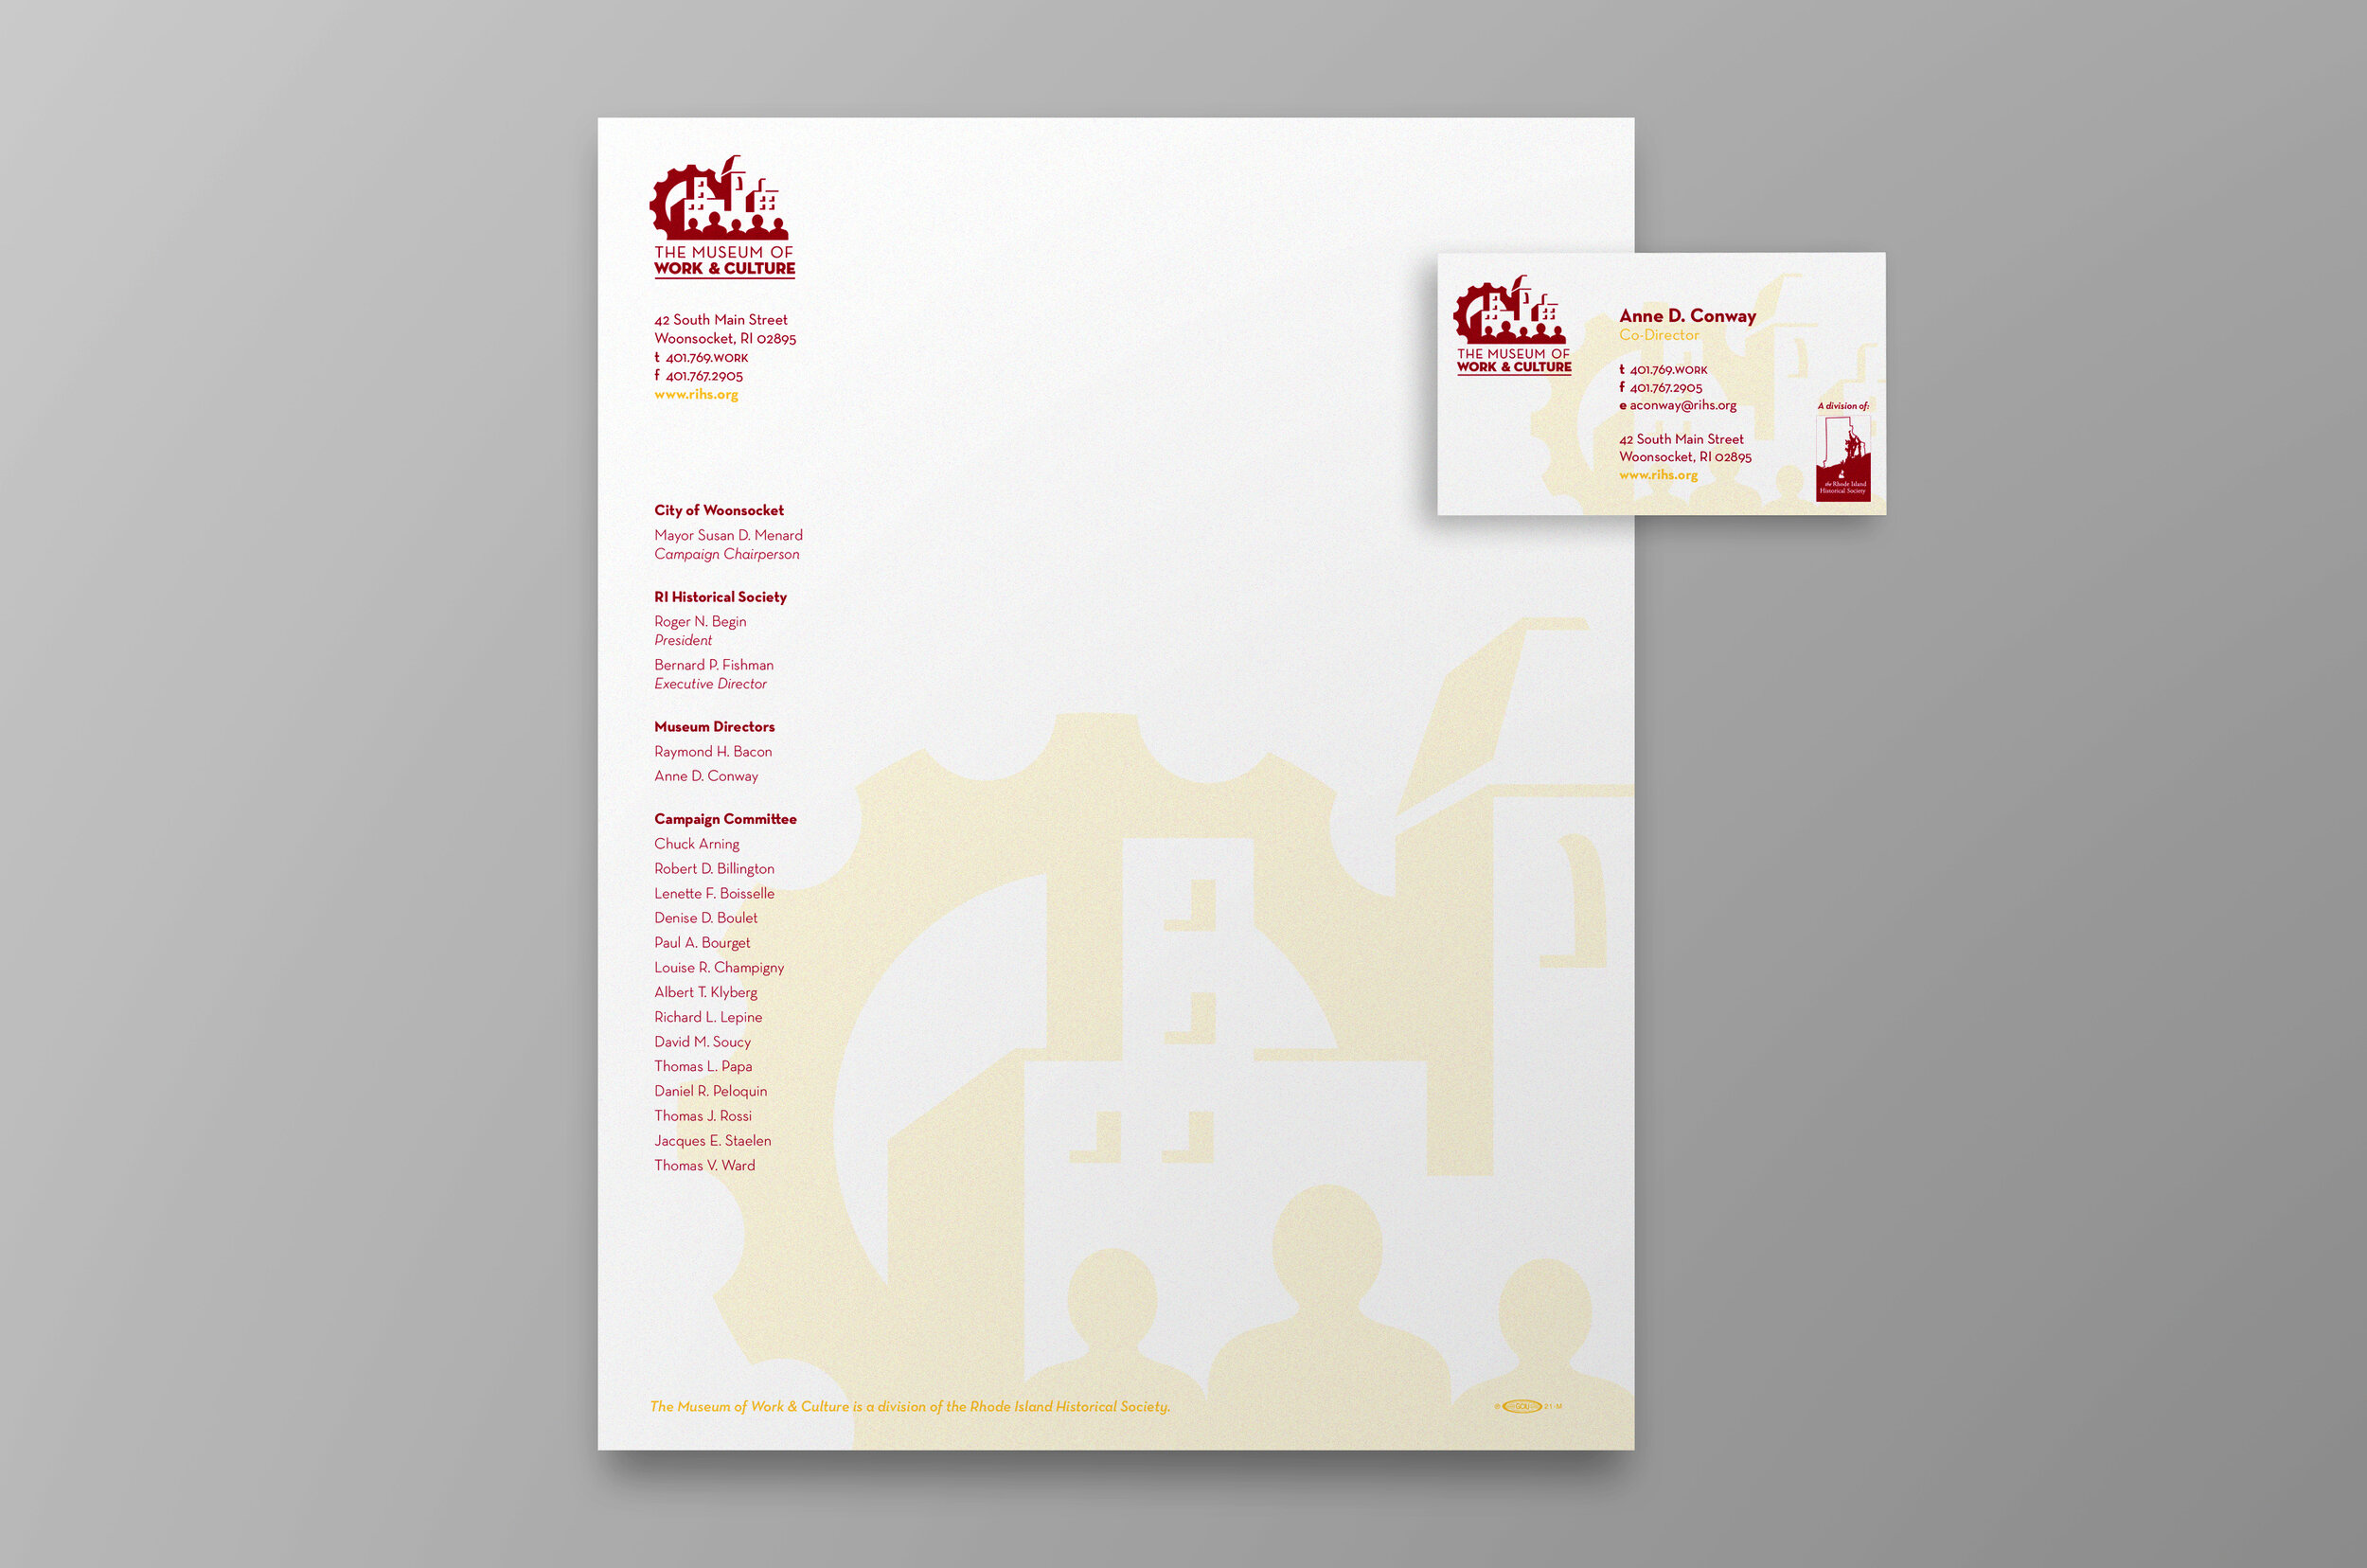   letterhead system  • designer/director: Michael Balint • assistant designer: Dawn Vietro 